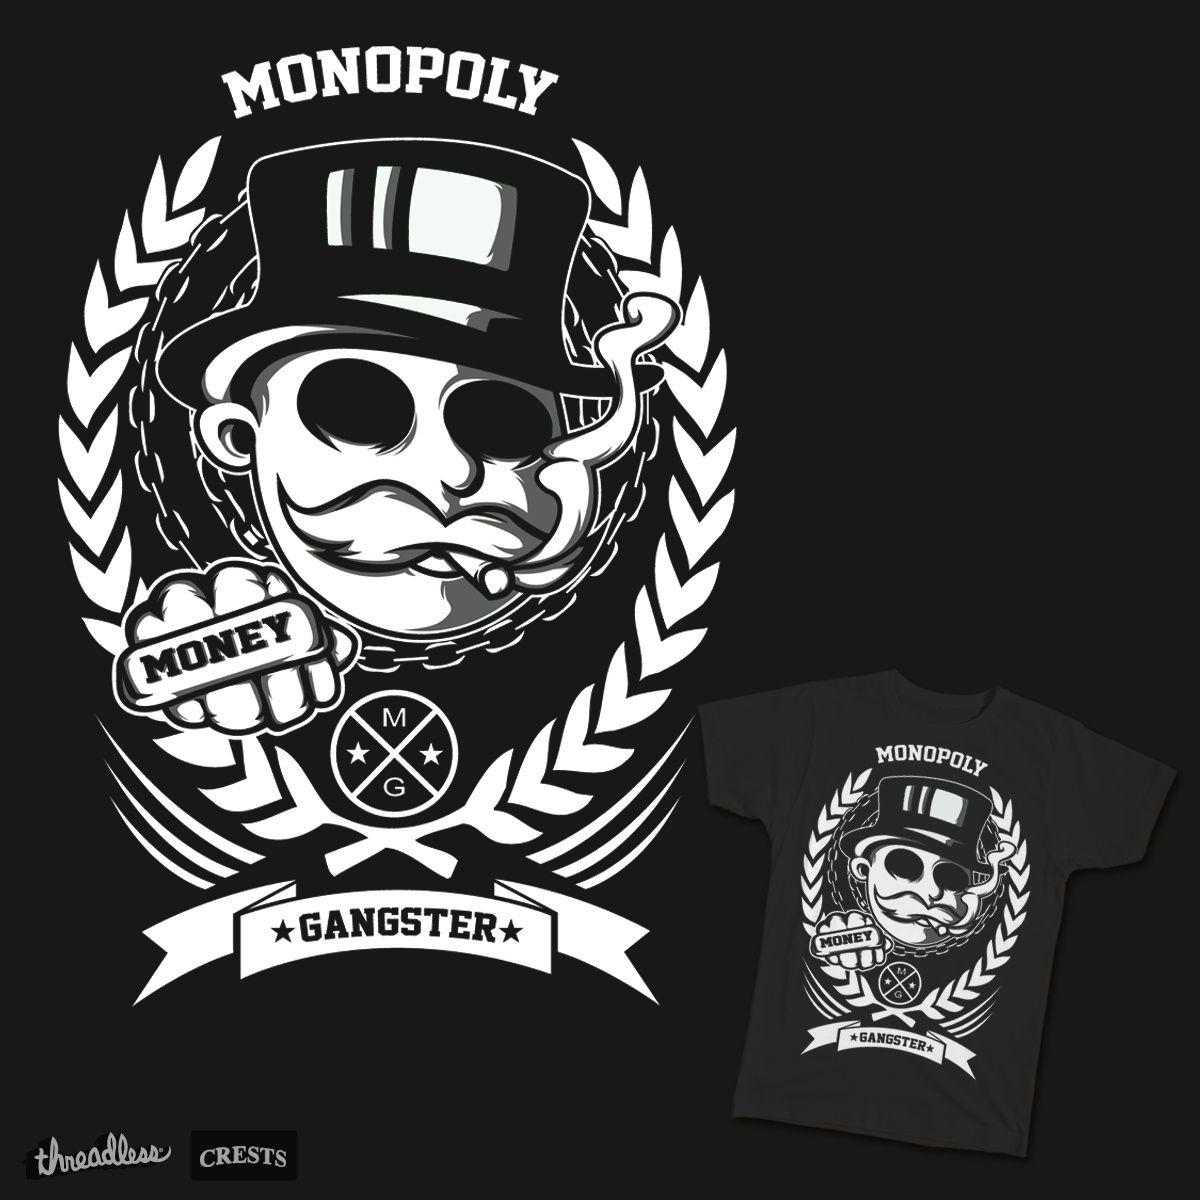 Gangster Money Logo - Score Monopoly Gangster by markanthonynova on Threadless